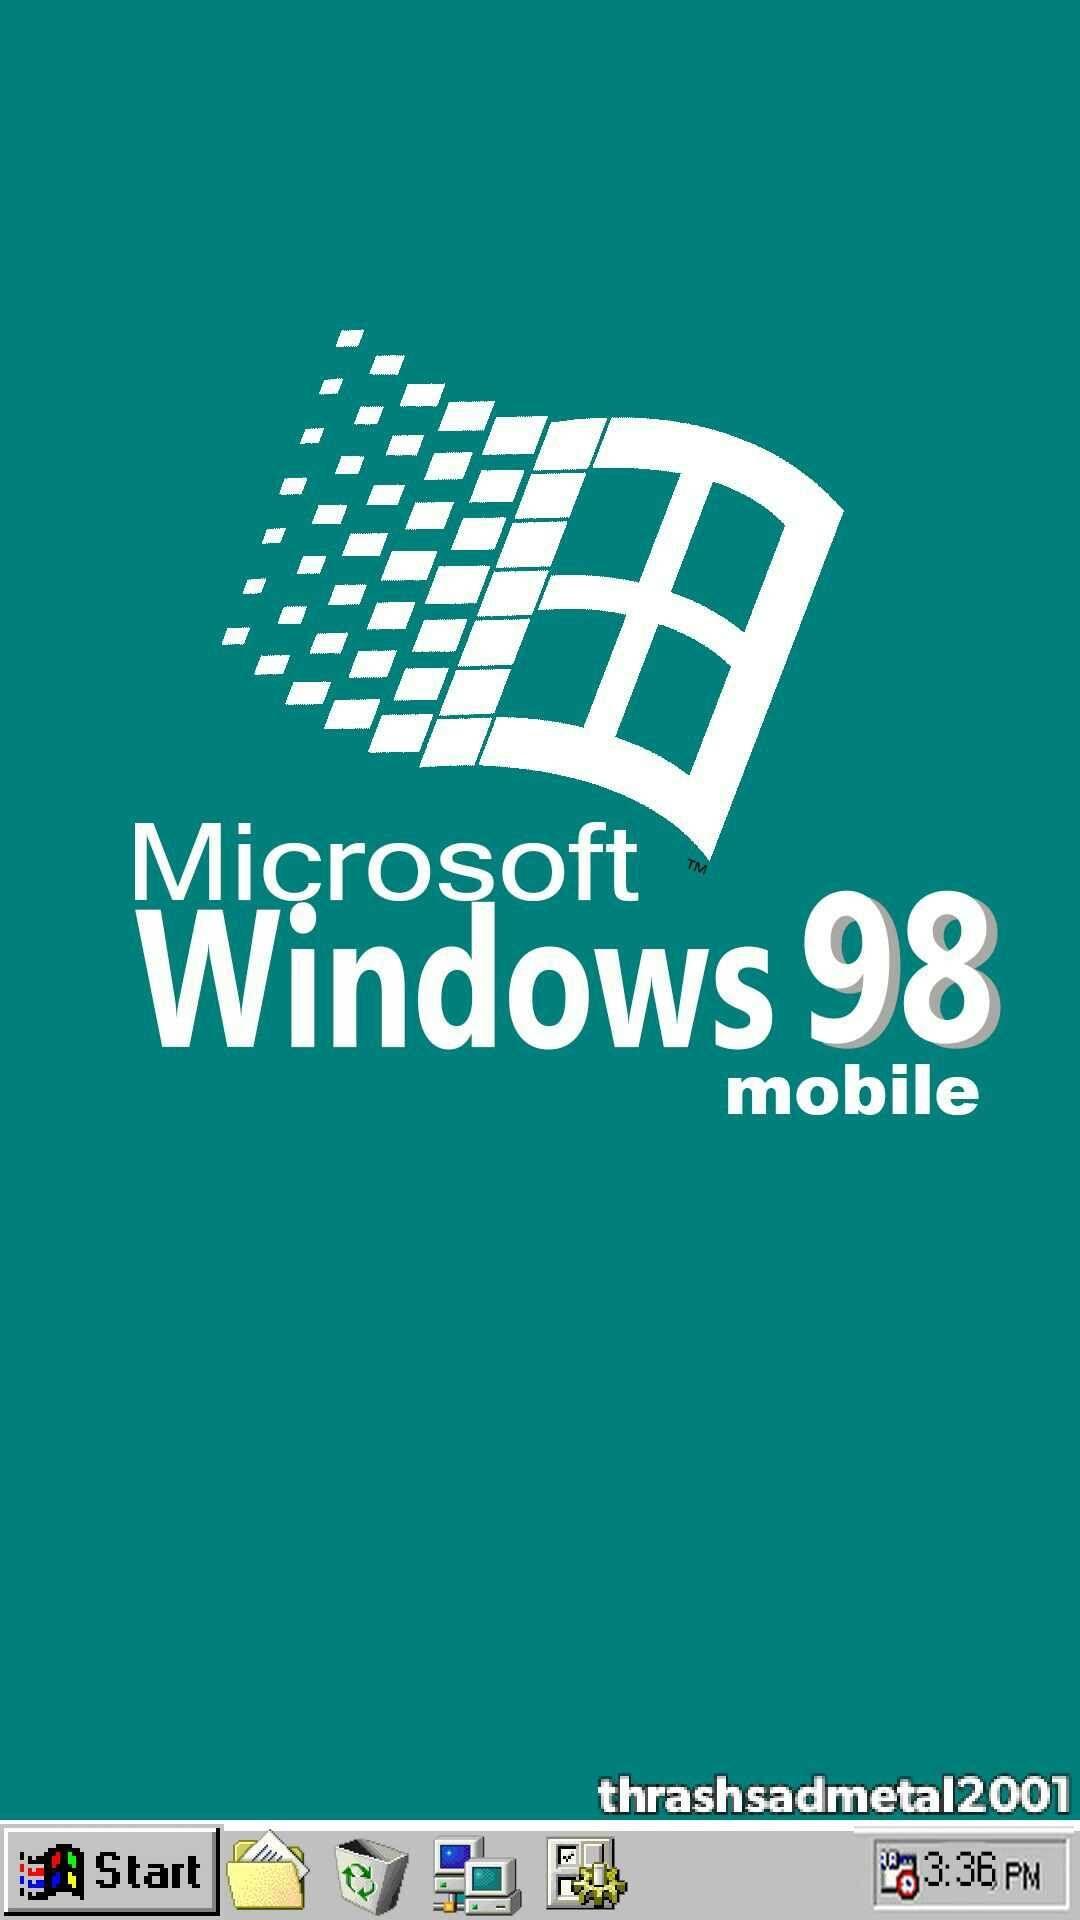 1080x1920 thrashsadmetal2001: “Windows 98 mobile”